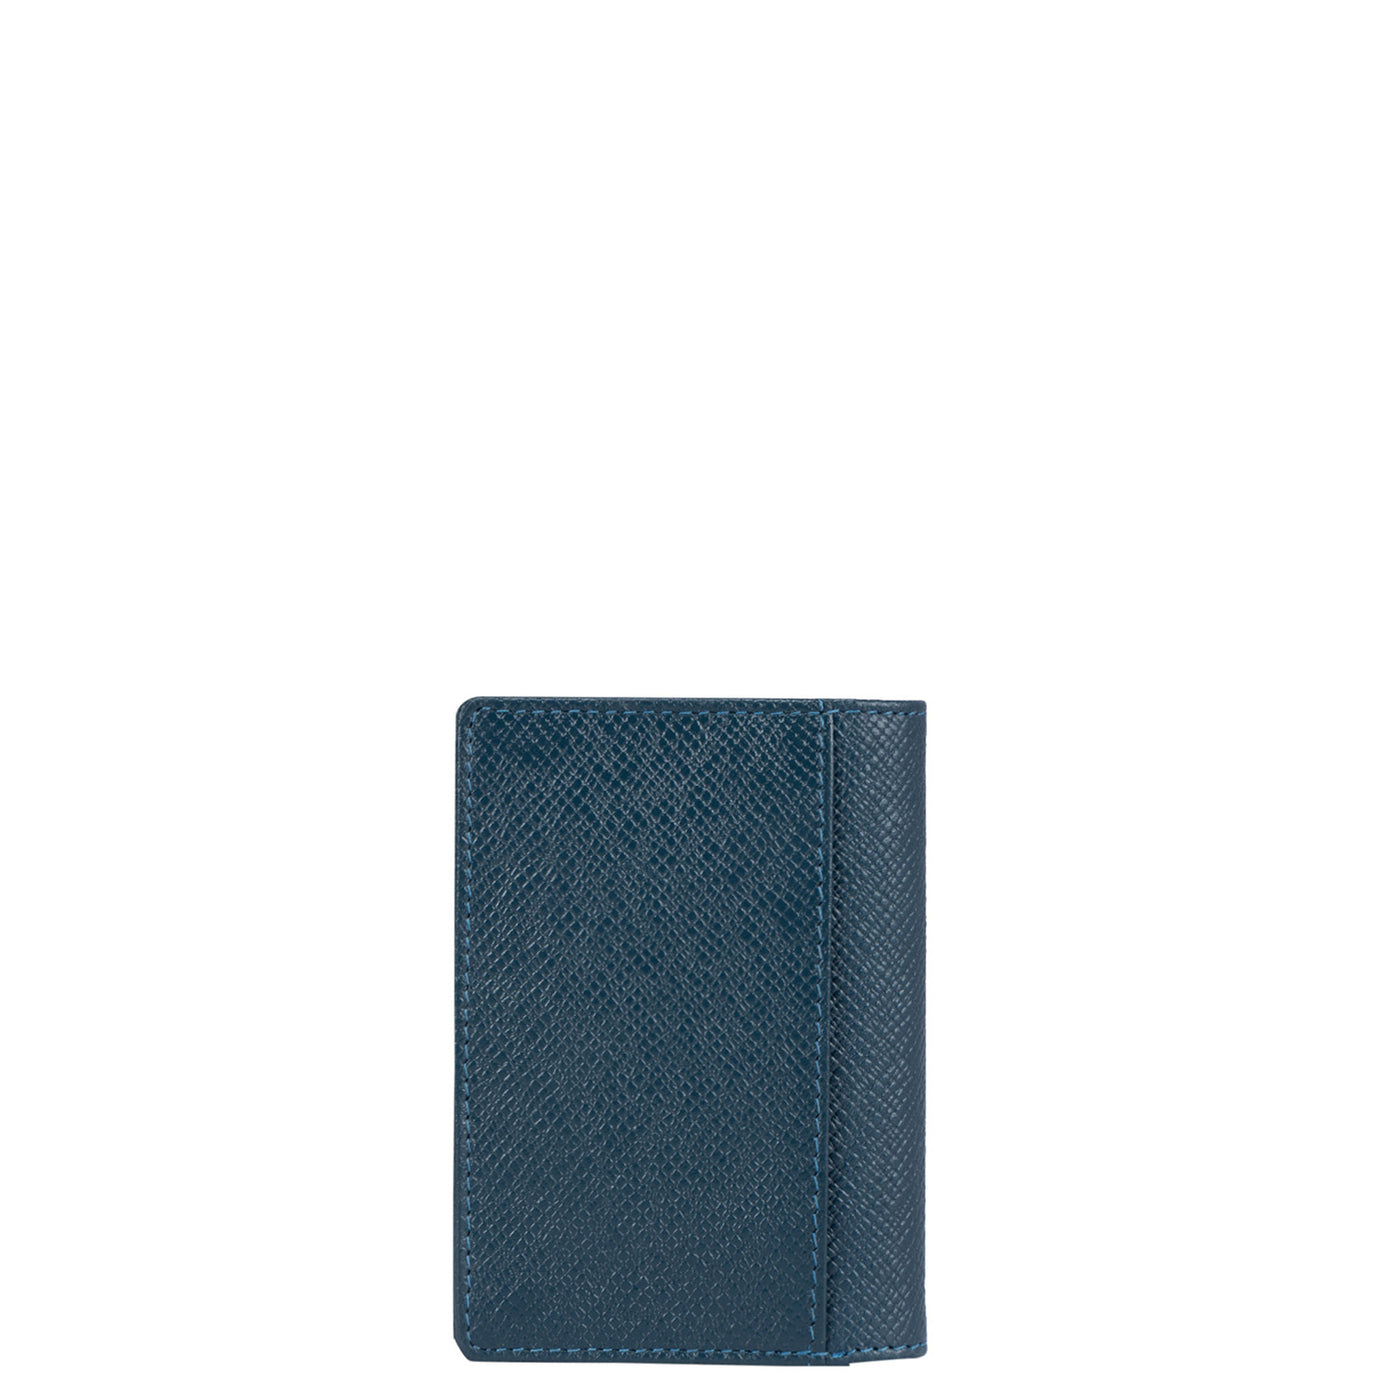 Franzy Leather Card Case - Ocean